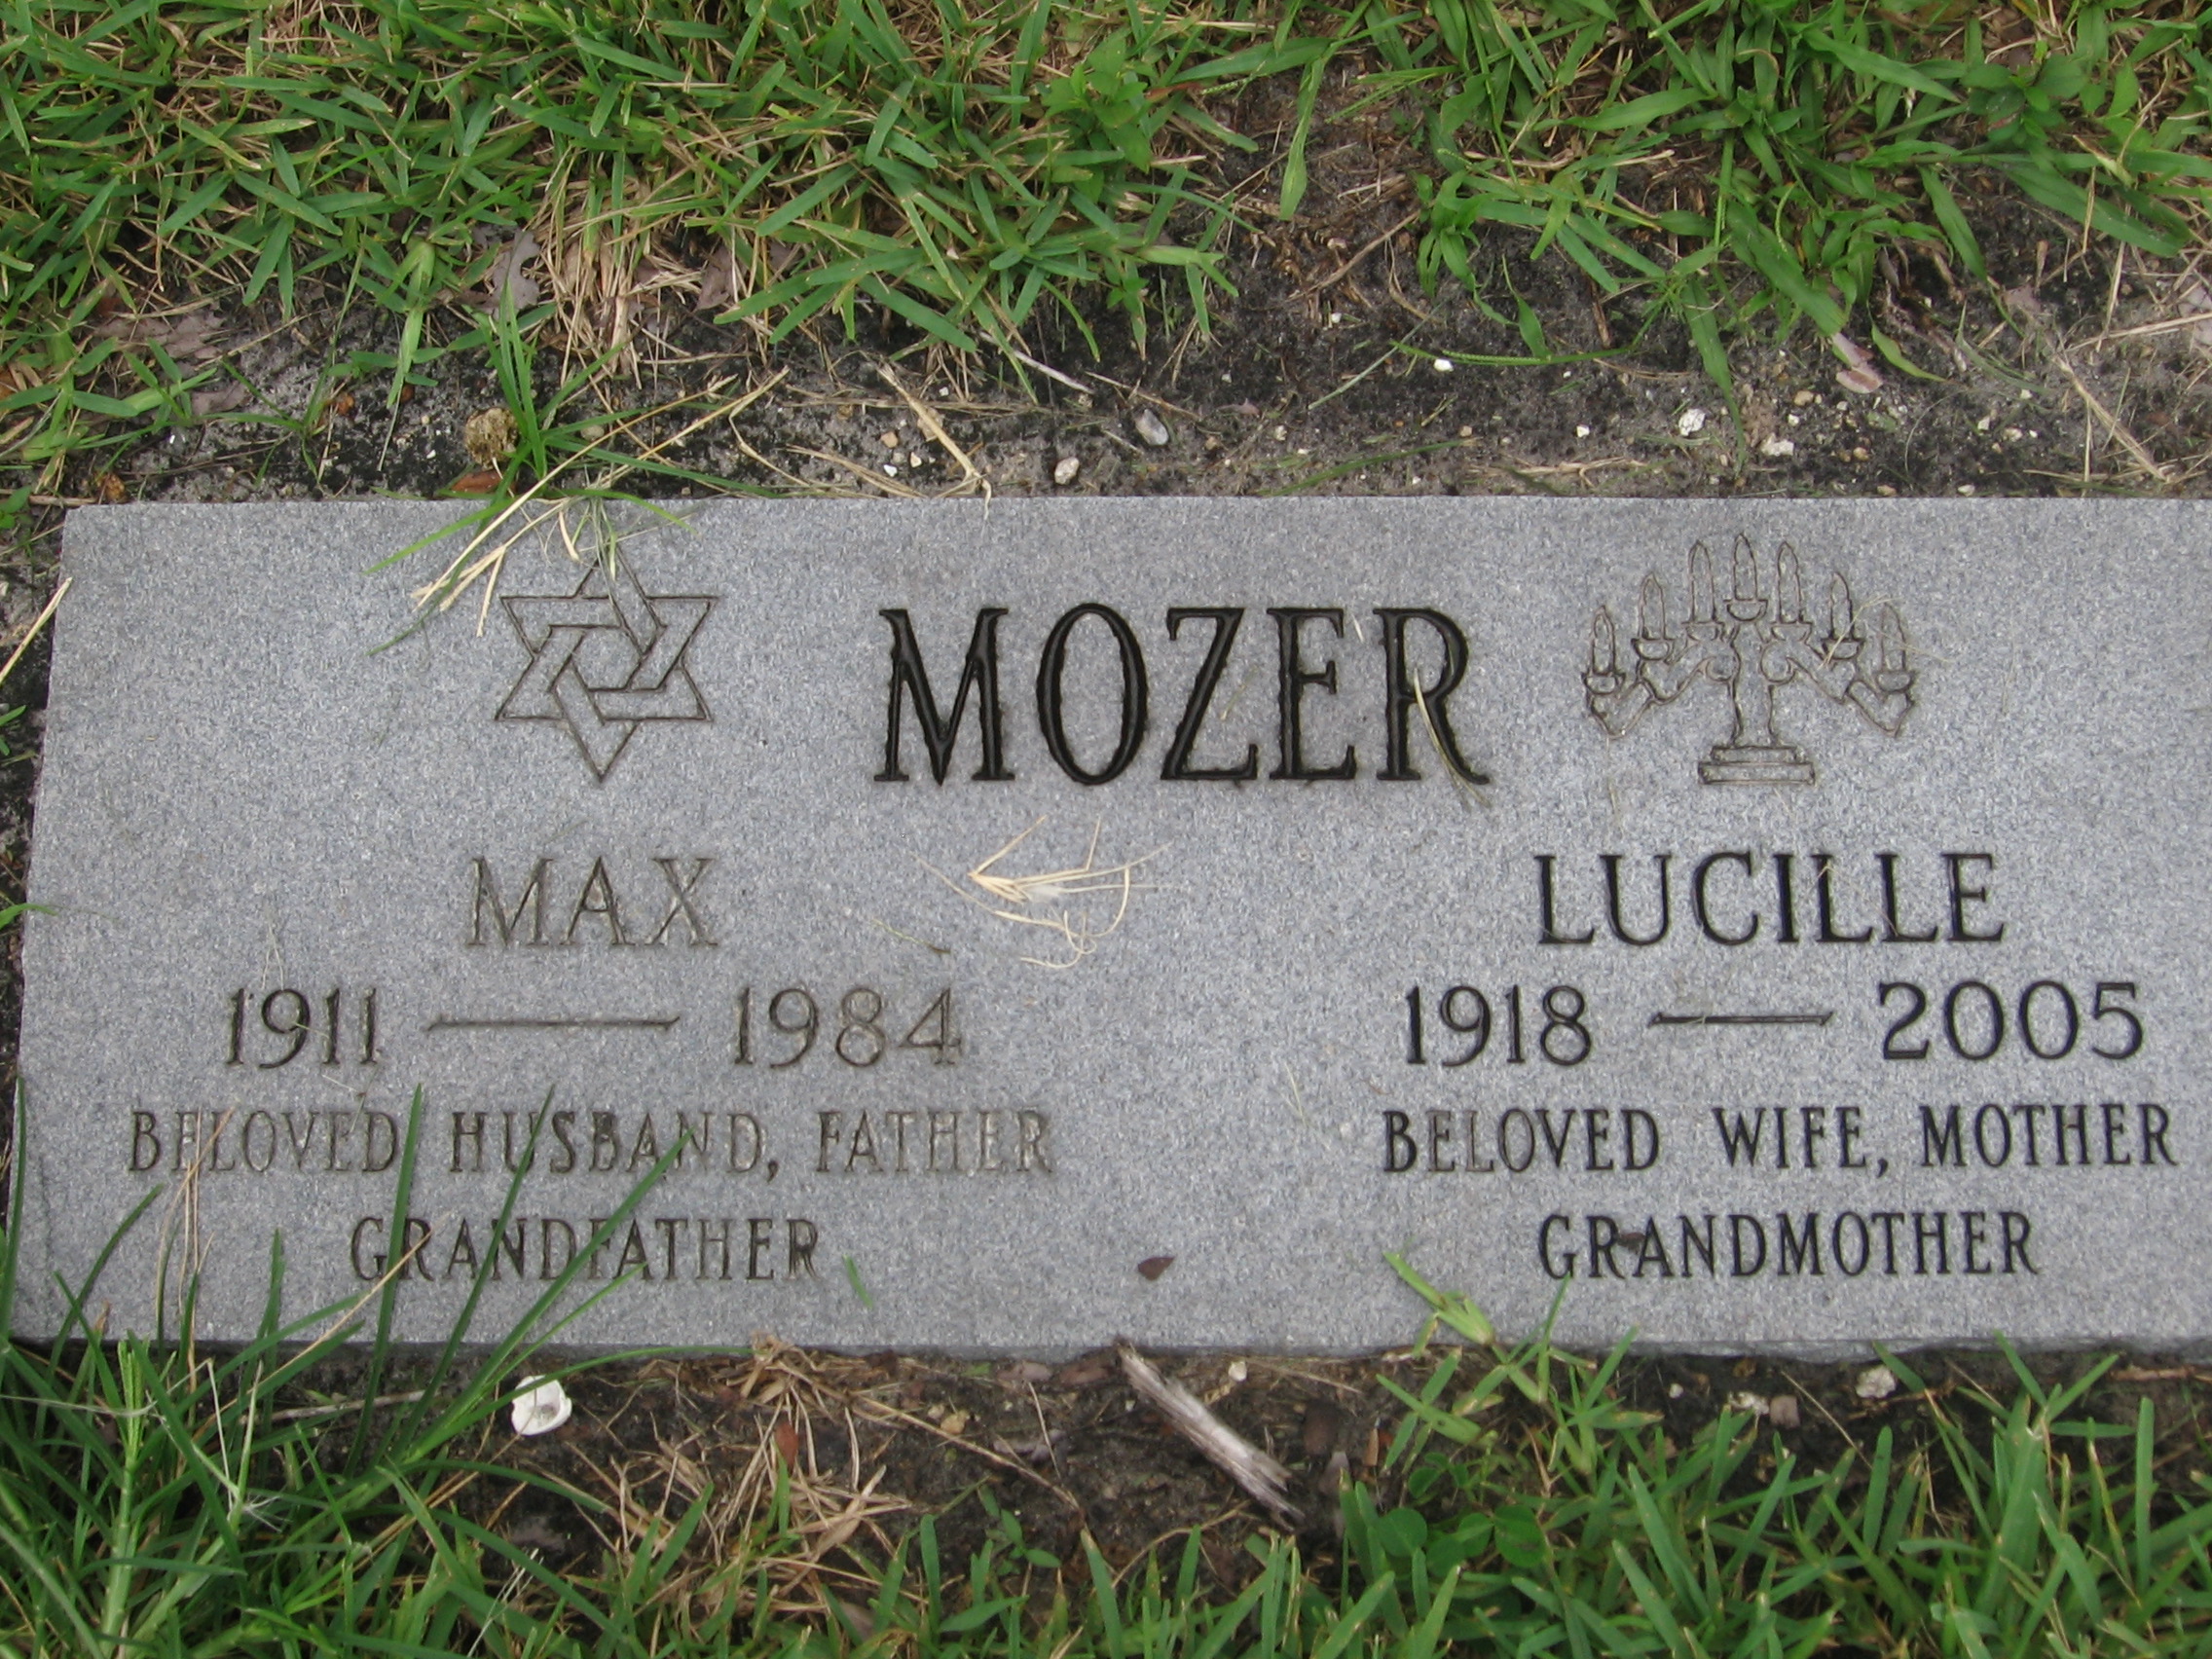 Max Mozer